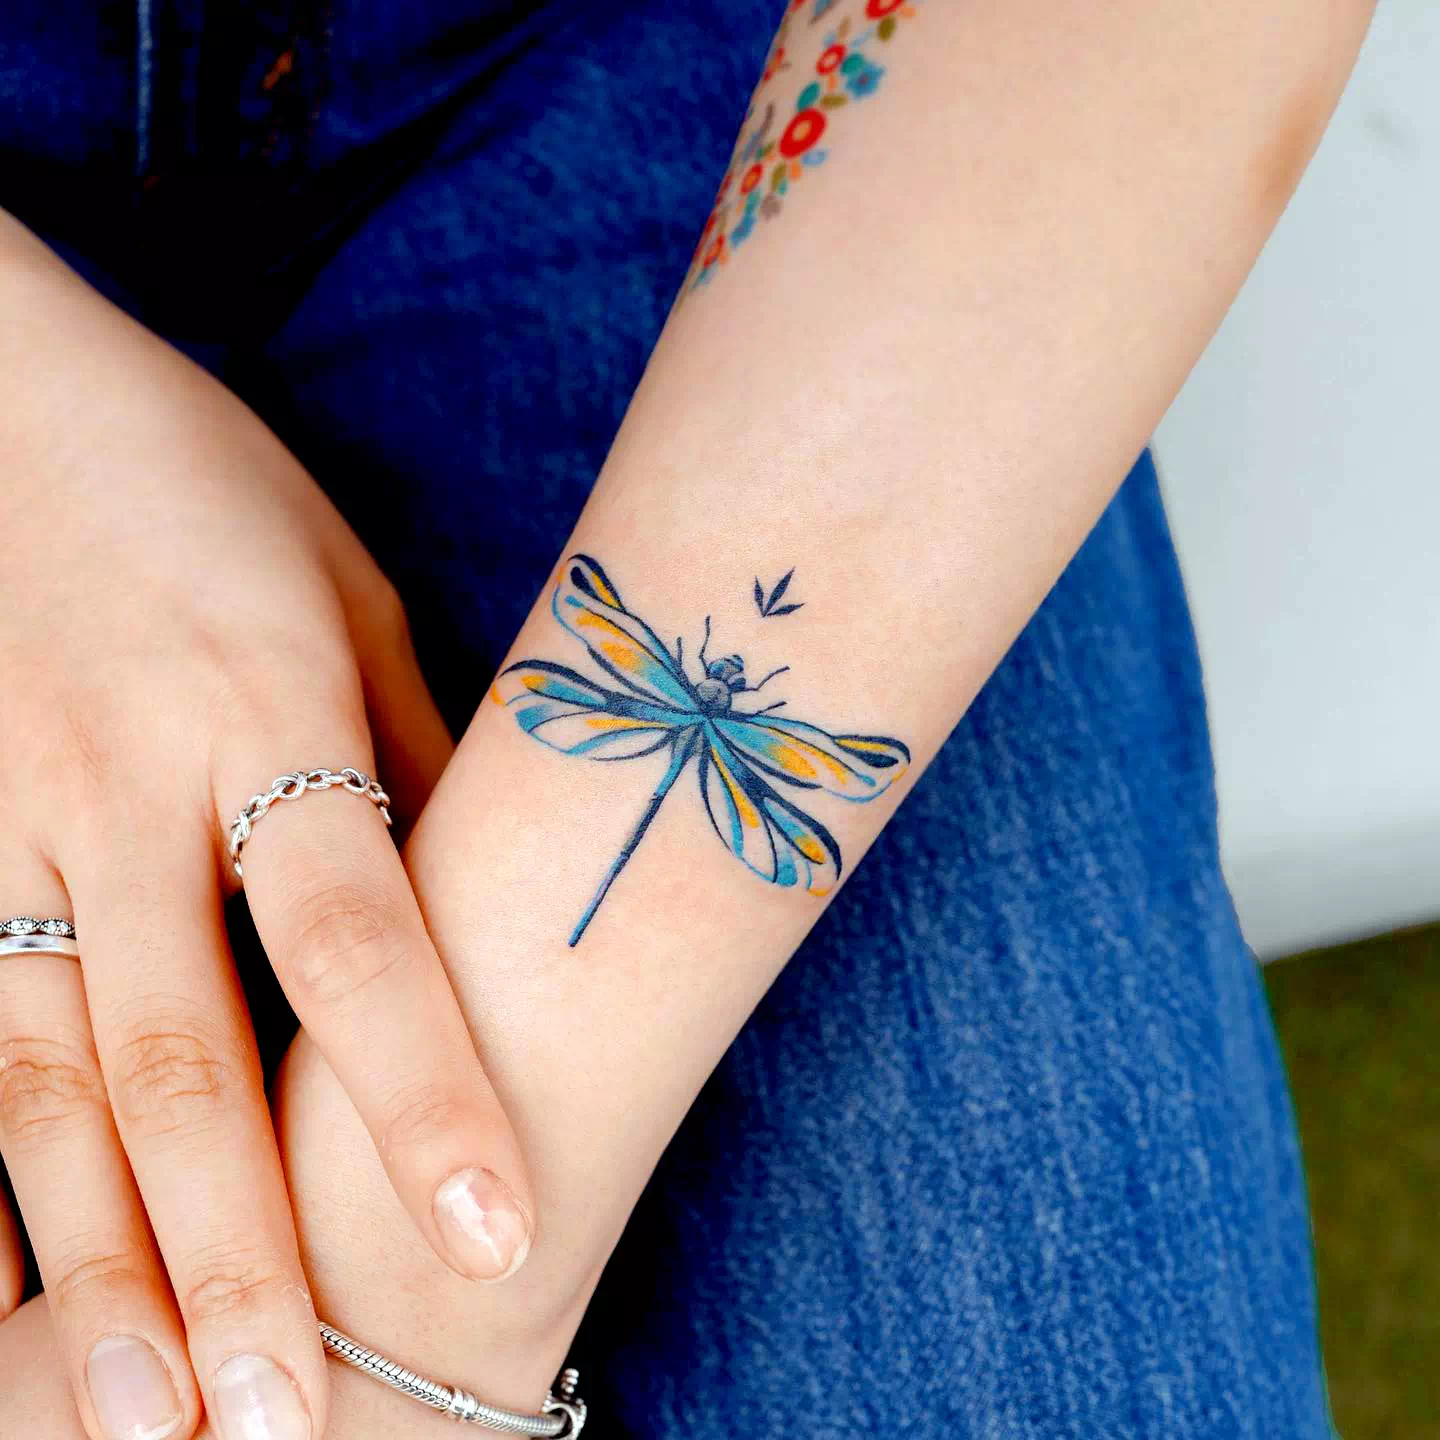 Tatuaje de una pequeña libélula